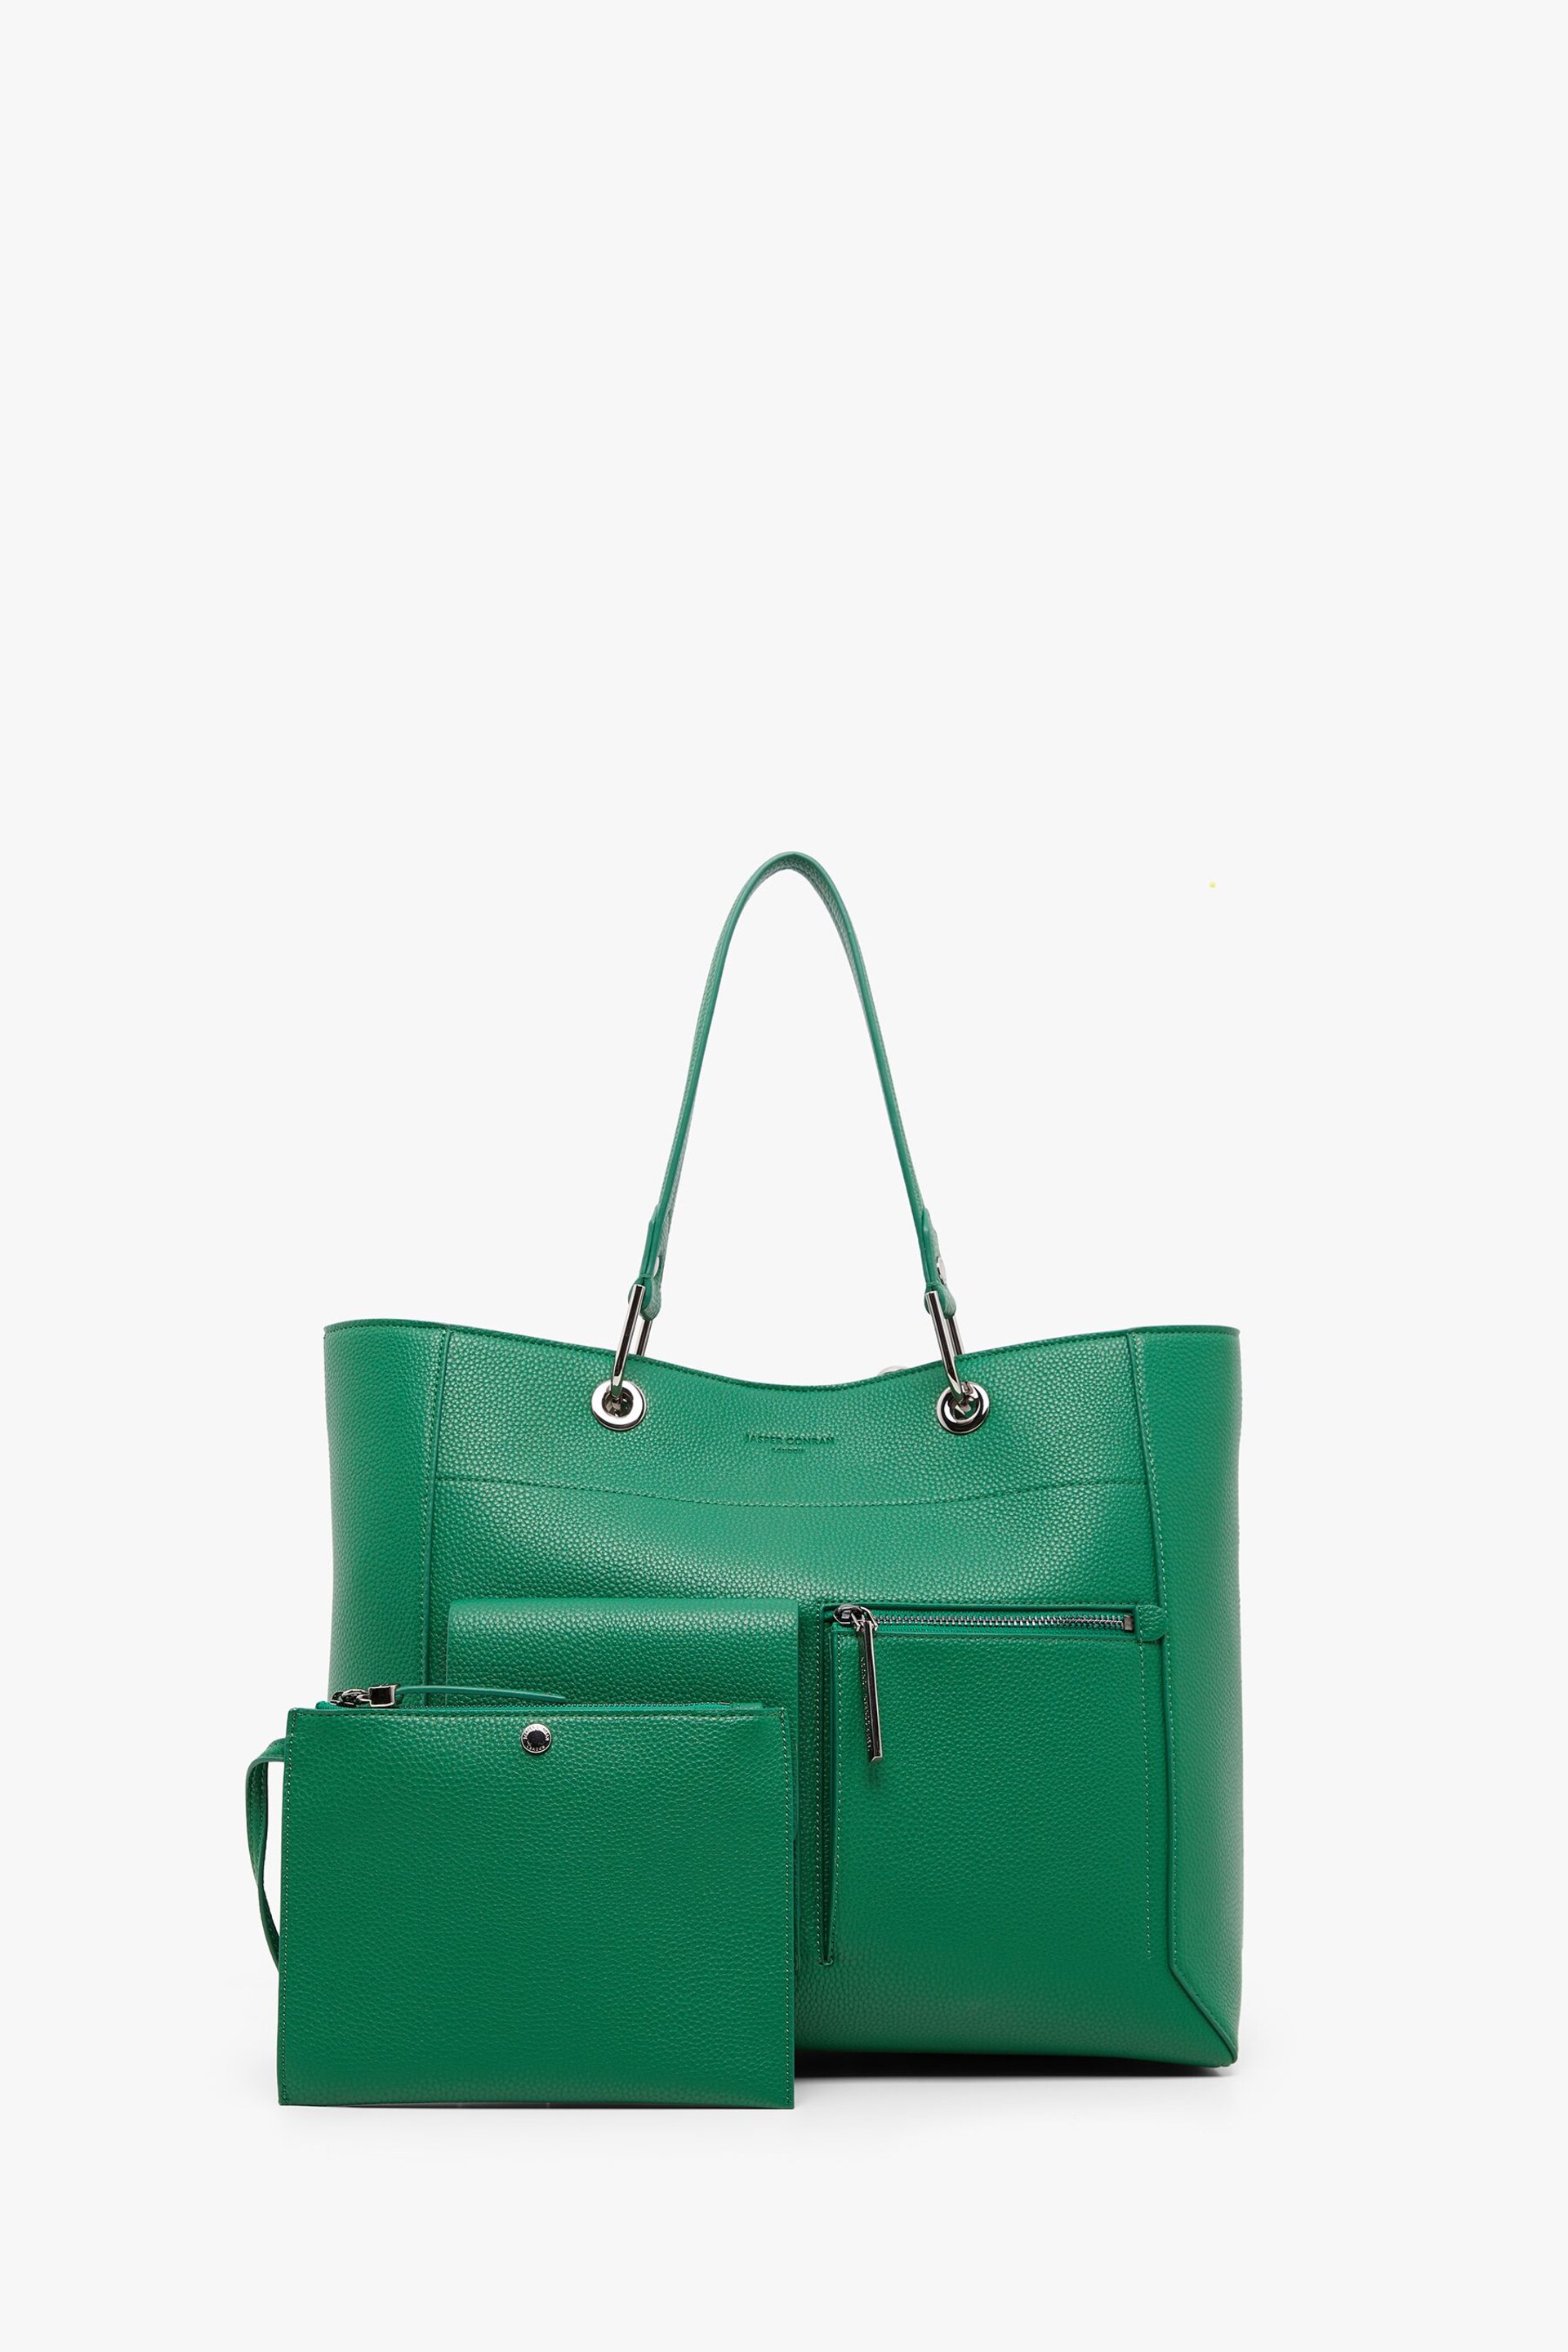 Jasper Conran London Green Shopper Bag - Image 2 of 7